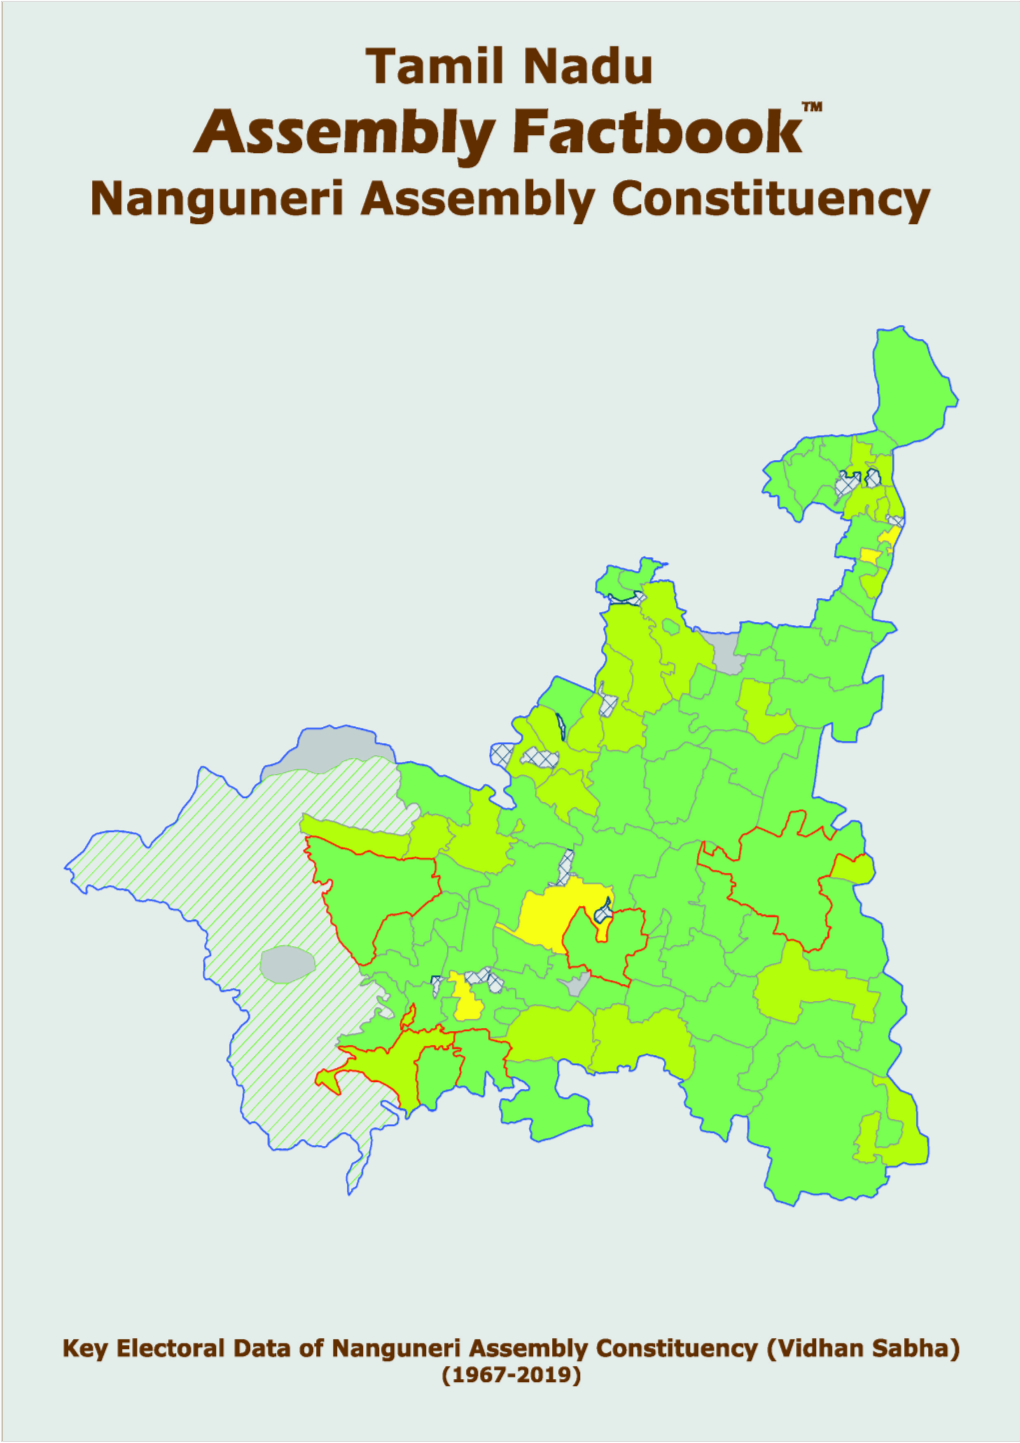 Nanguneri Assembly Tamil Nadu Factbook